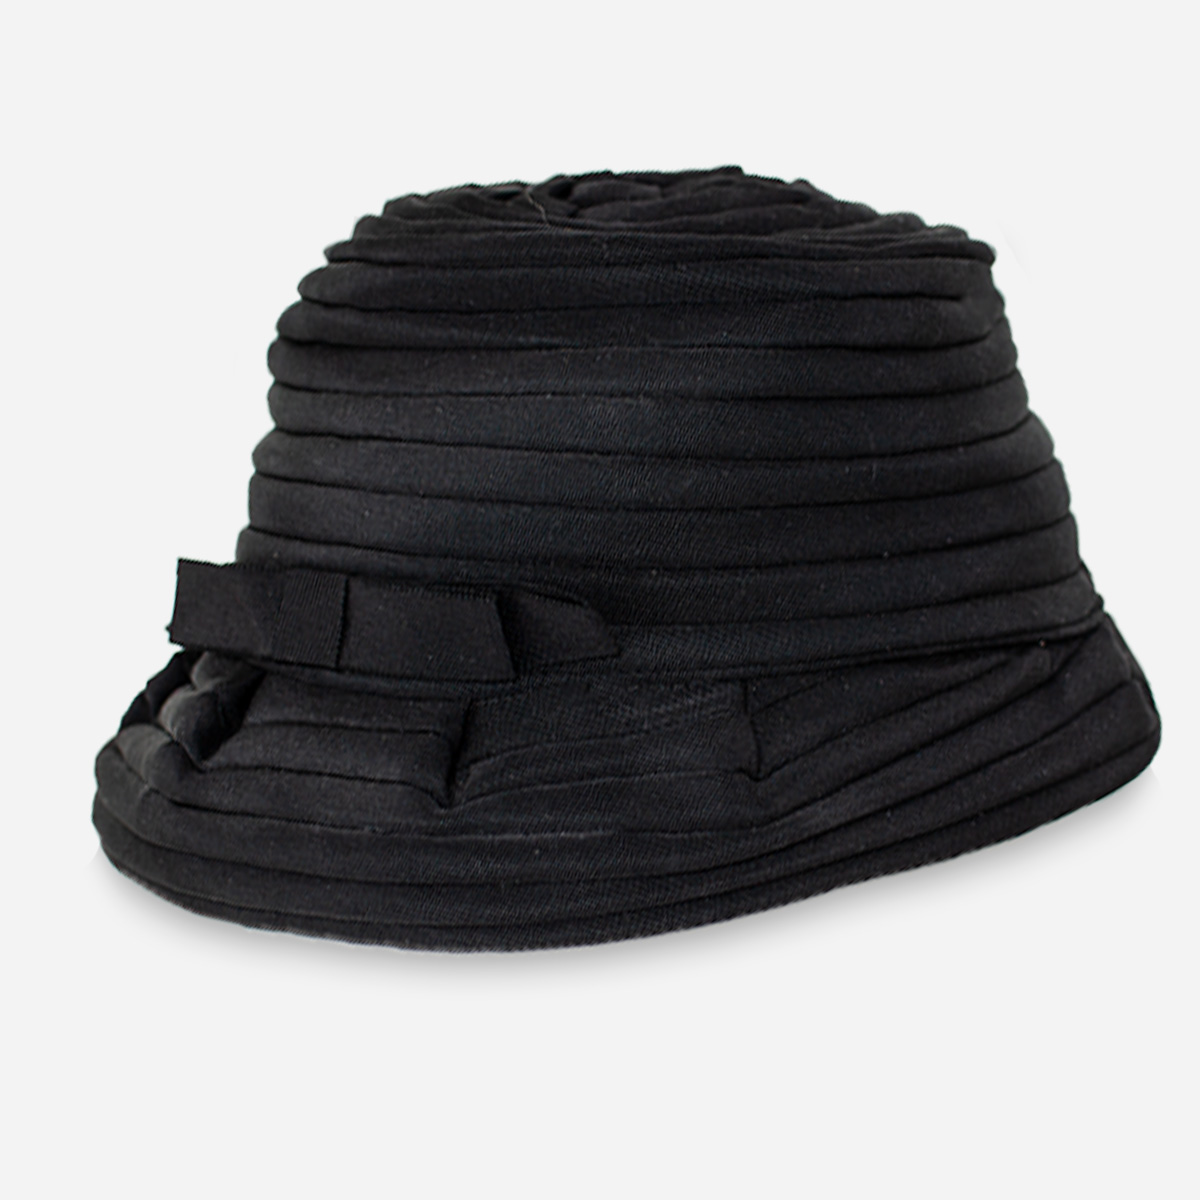 Black Bucket Hat by Finley, Vintage 1960s